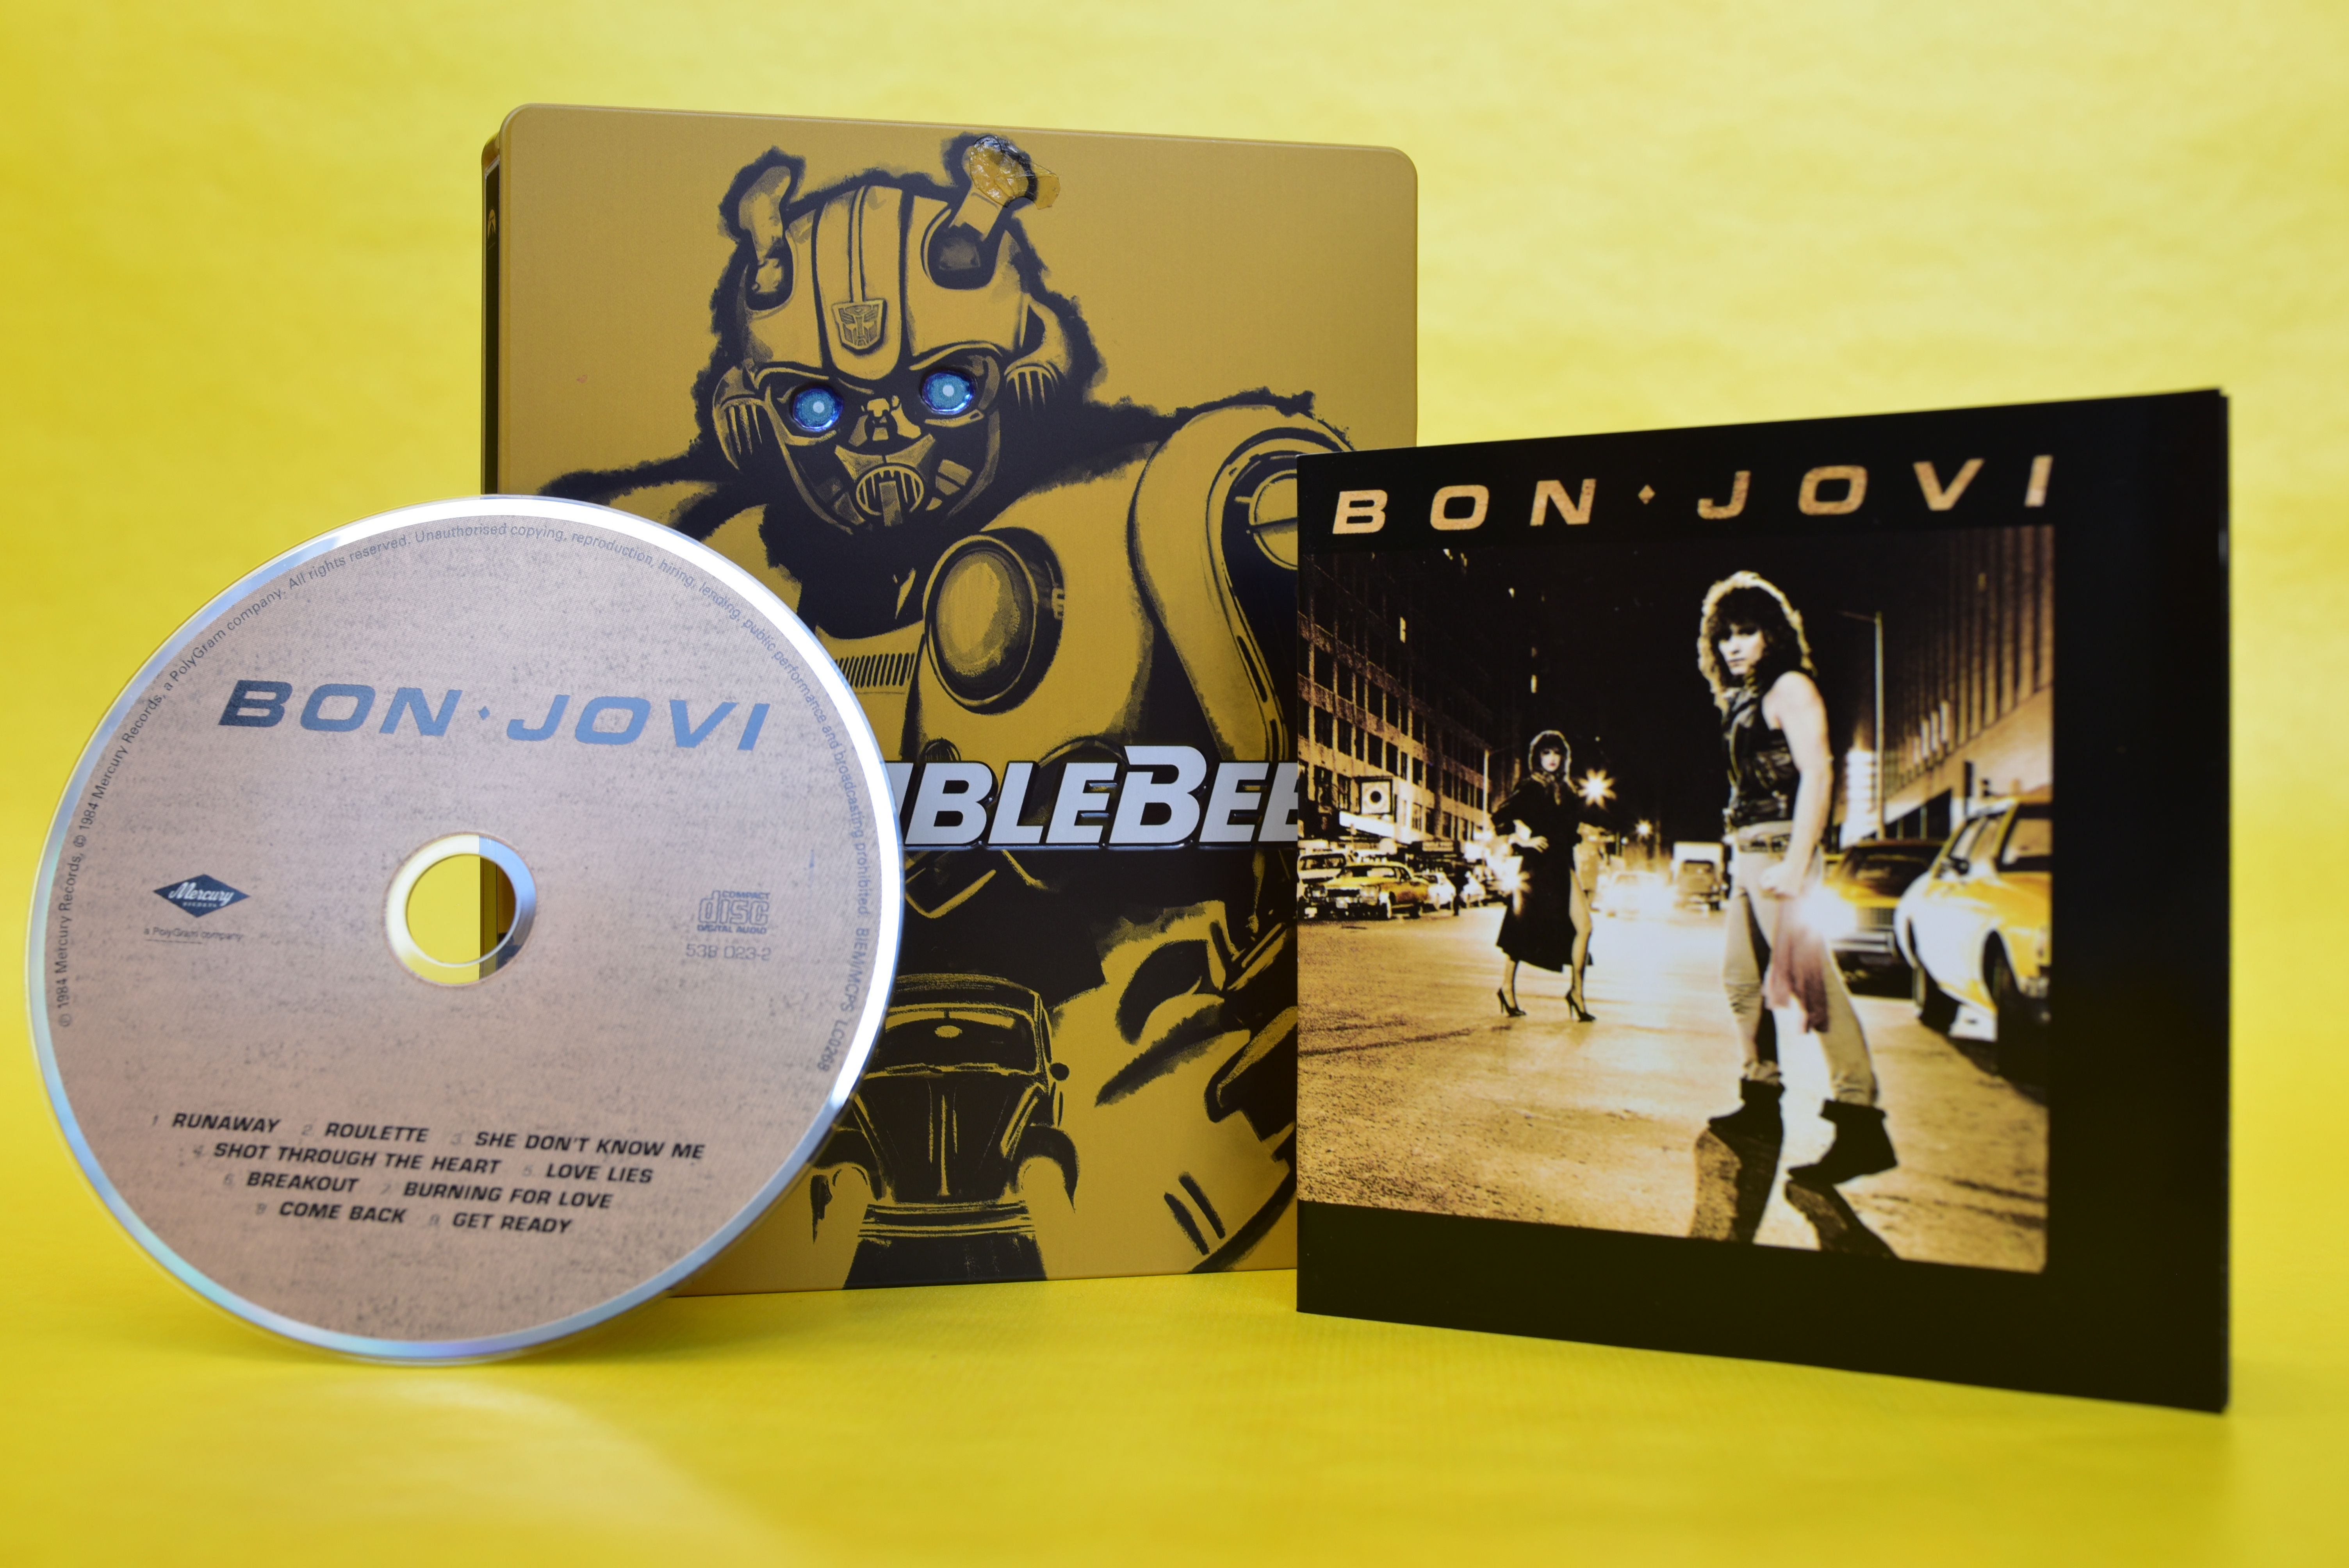 Bon Jovi CD